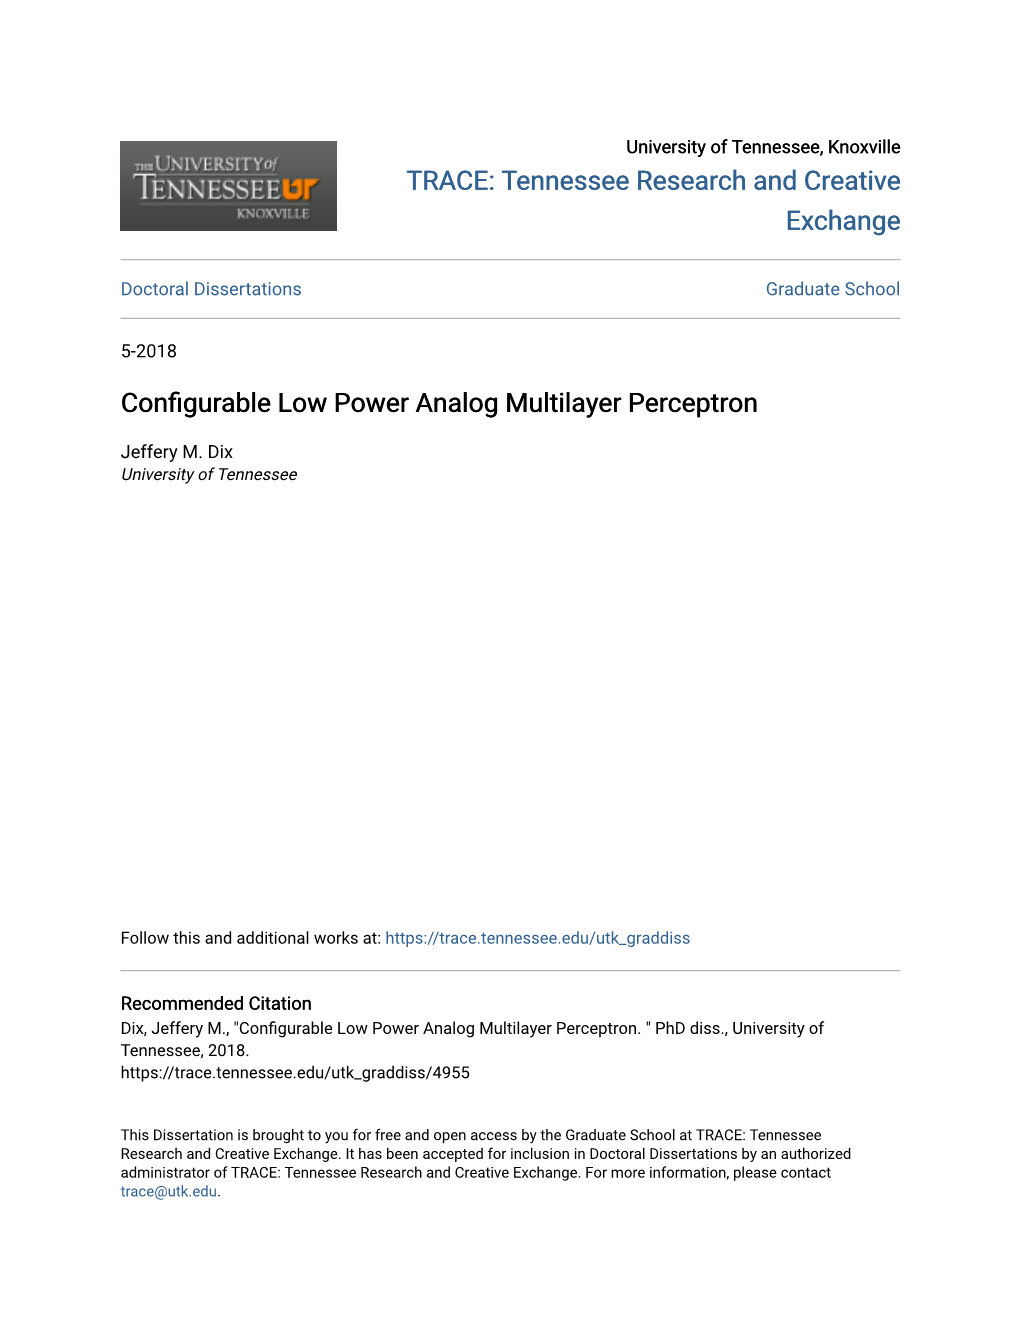 Configurable Low Power Analog Multilayer Perceptron